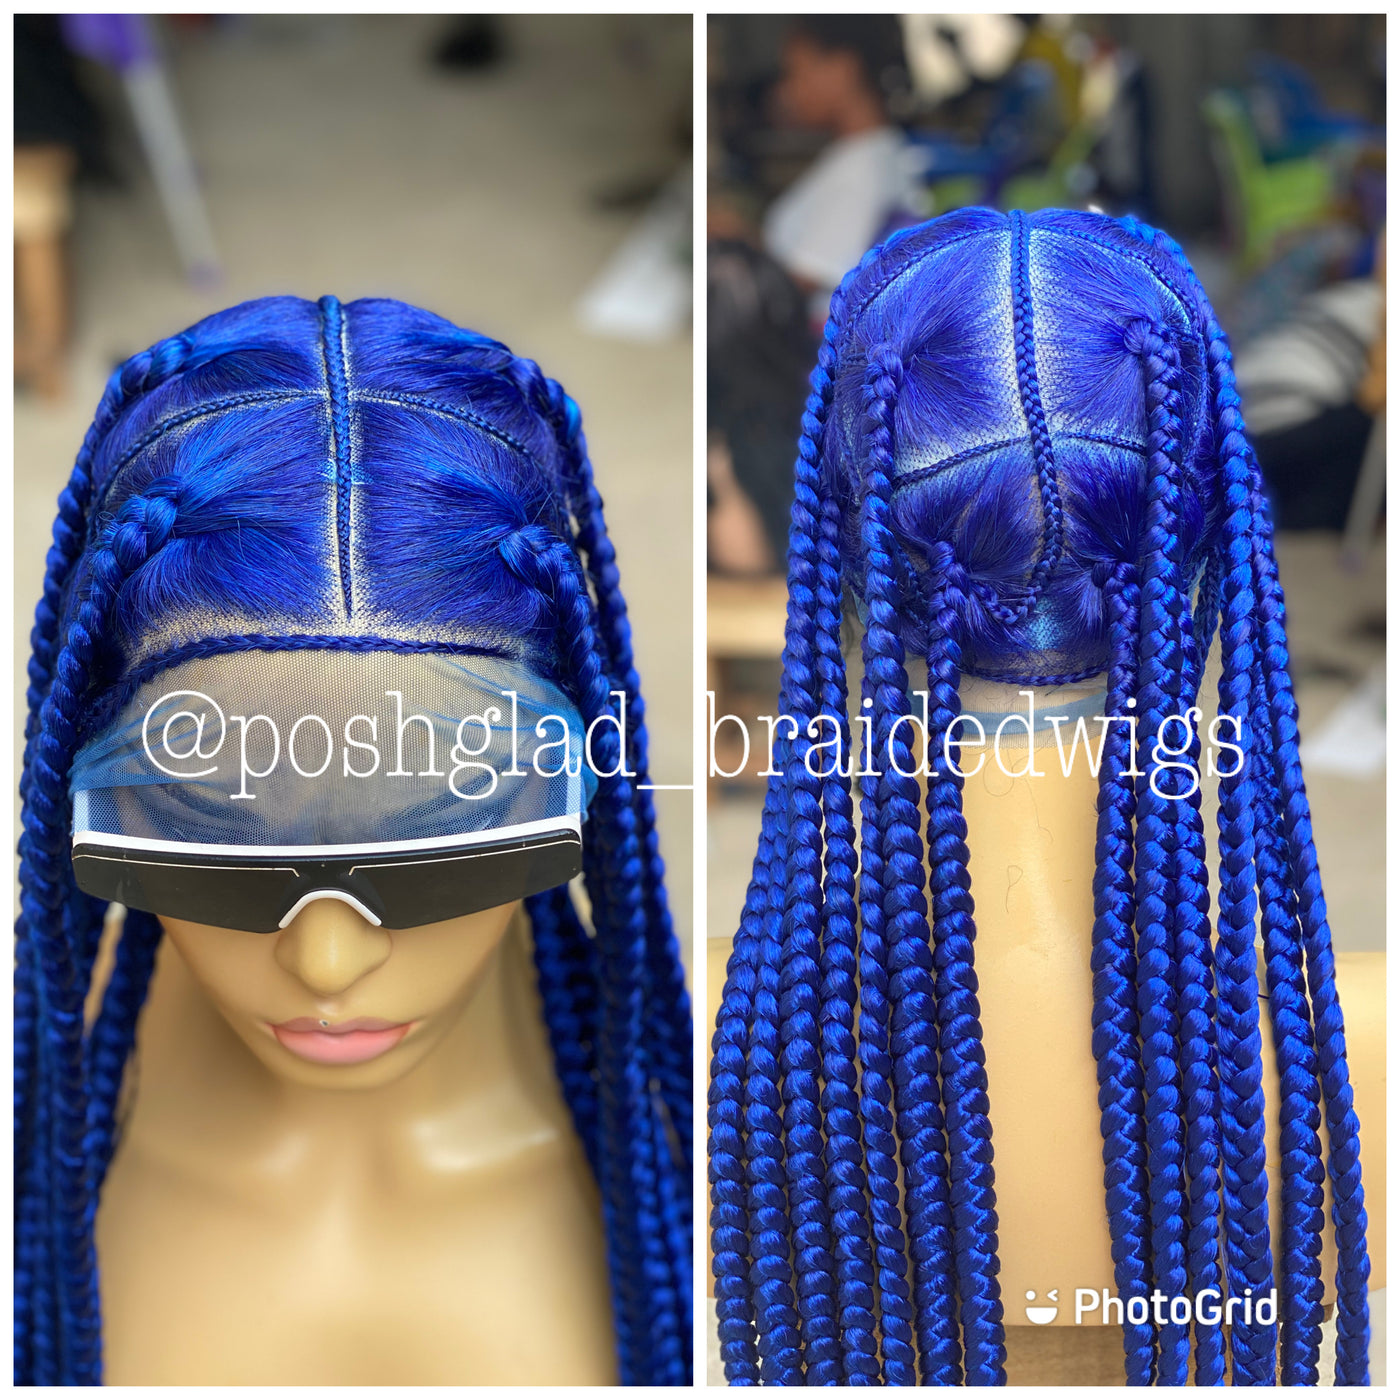 Large Knotless Braid - Full Lace - Adaora Poshglad Braided Wigs KNOTLESS